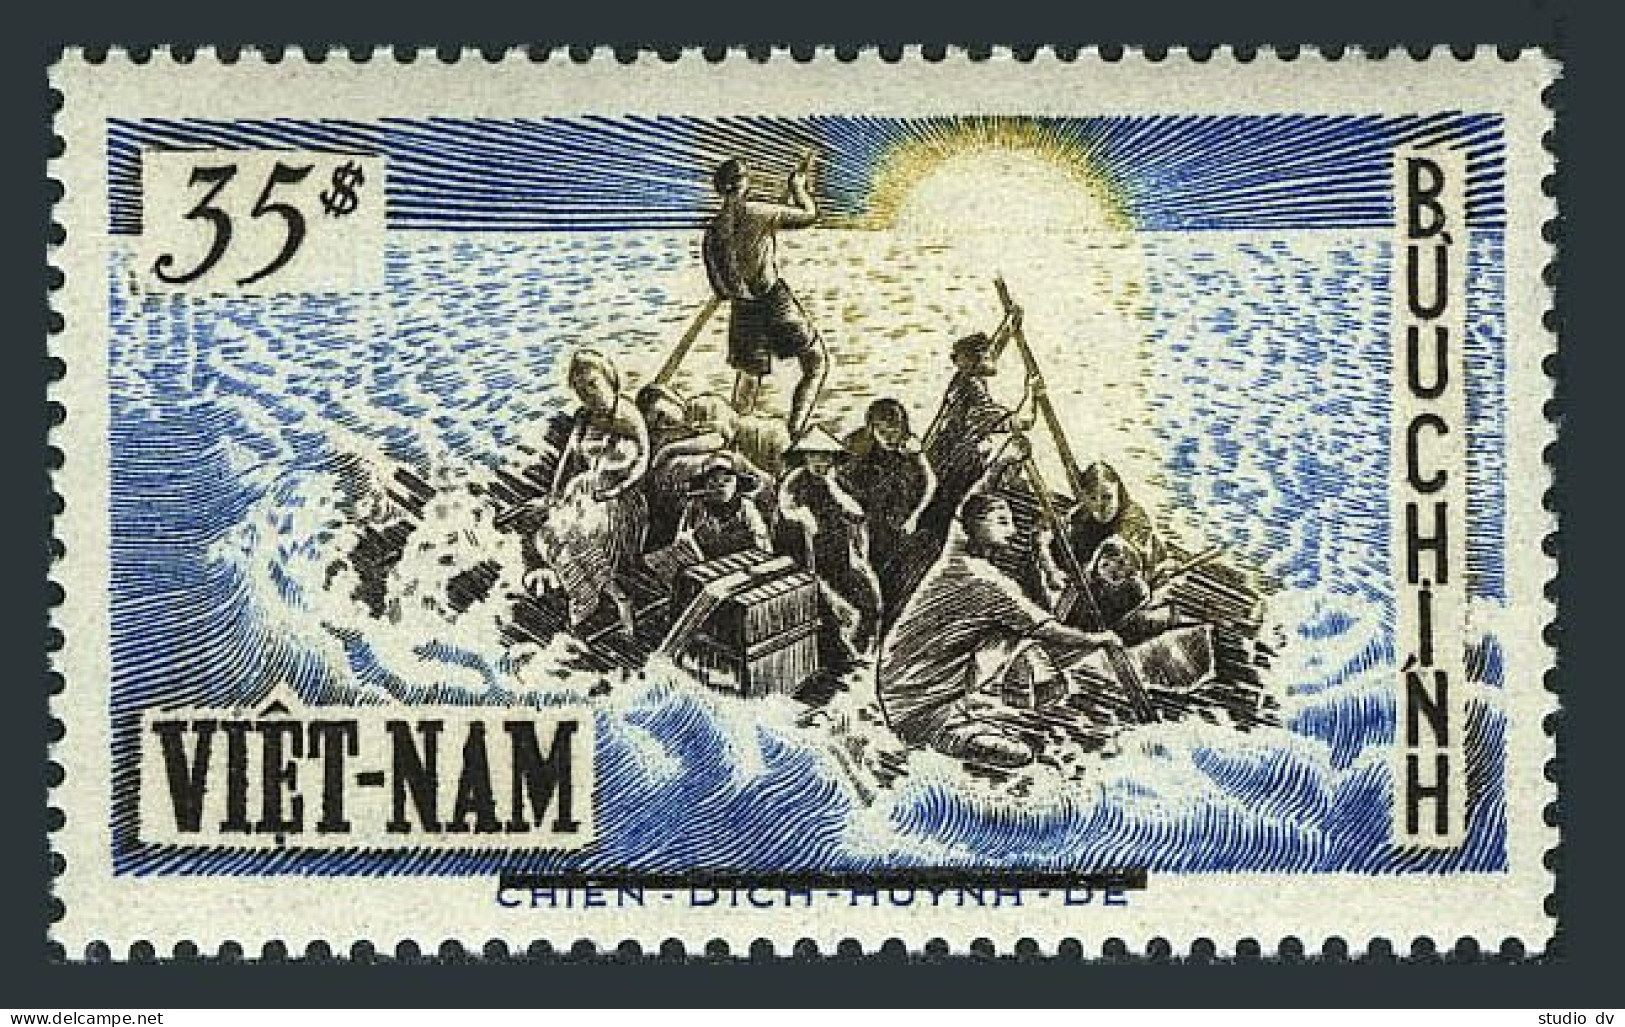 Viet Nam South 54, MNH. Michel 126. Refugees On Raft, 1956. - Viêt-Nam